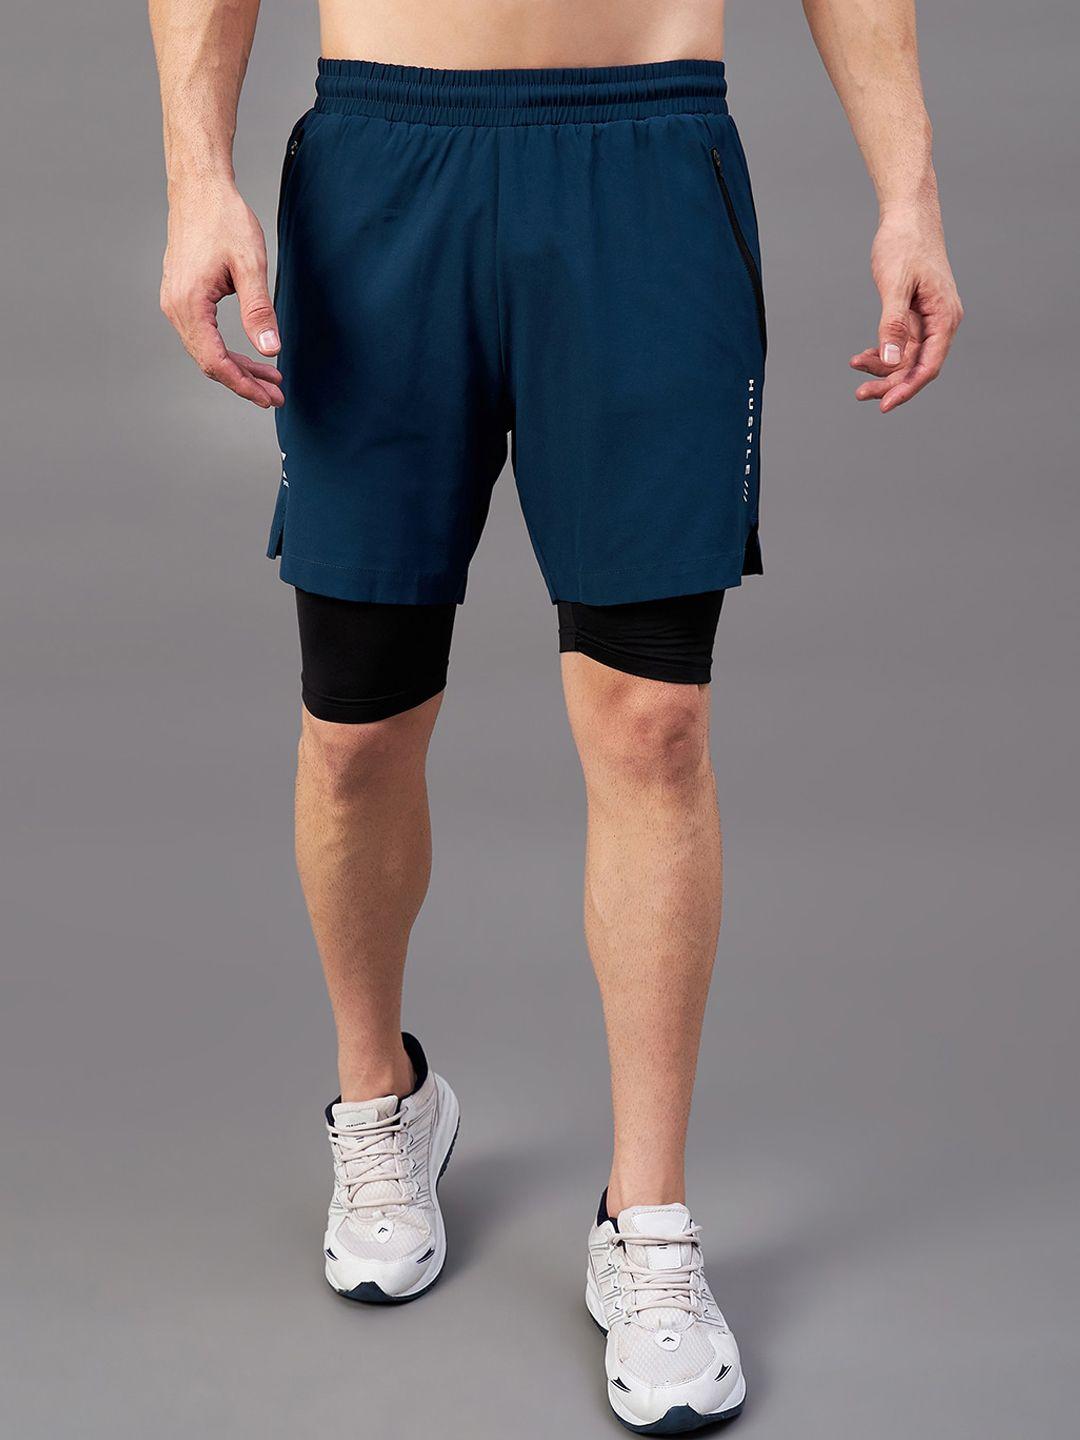 masch sports men mid-rise rapid-dry sports shorts